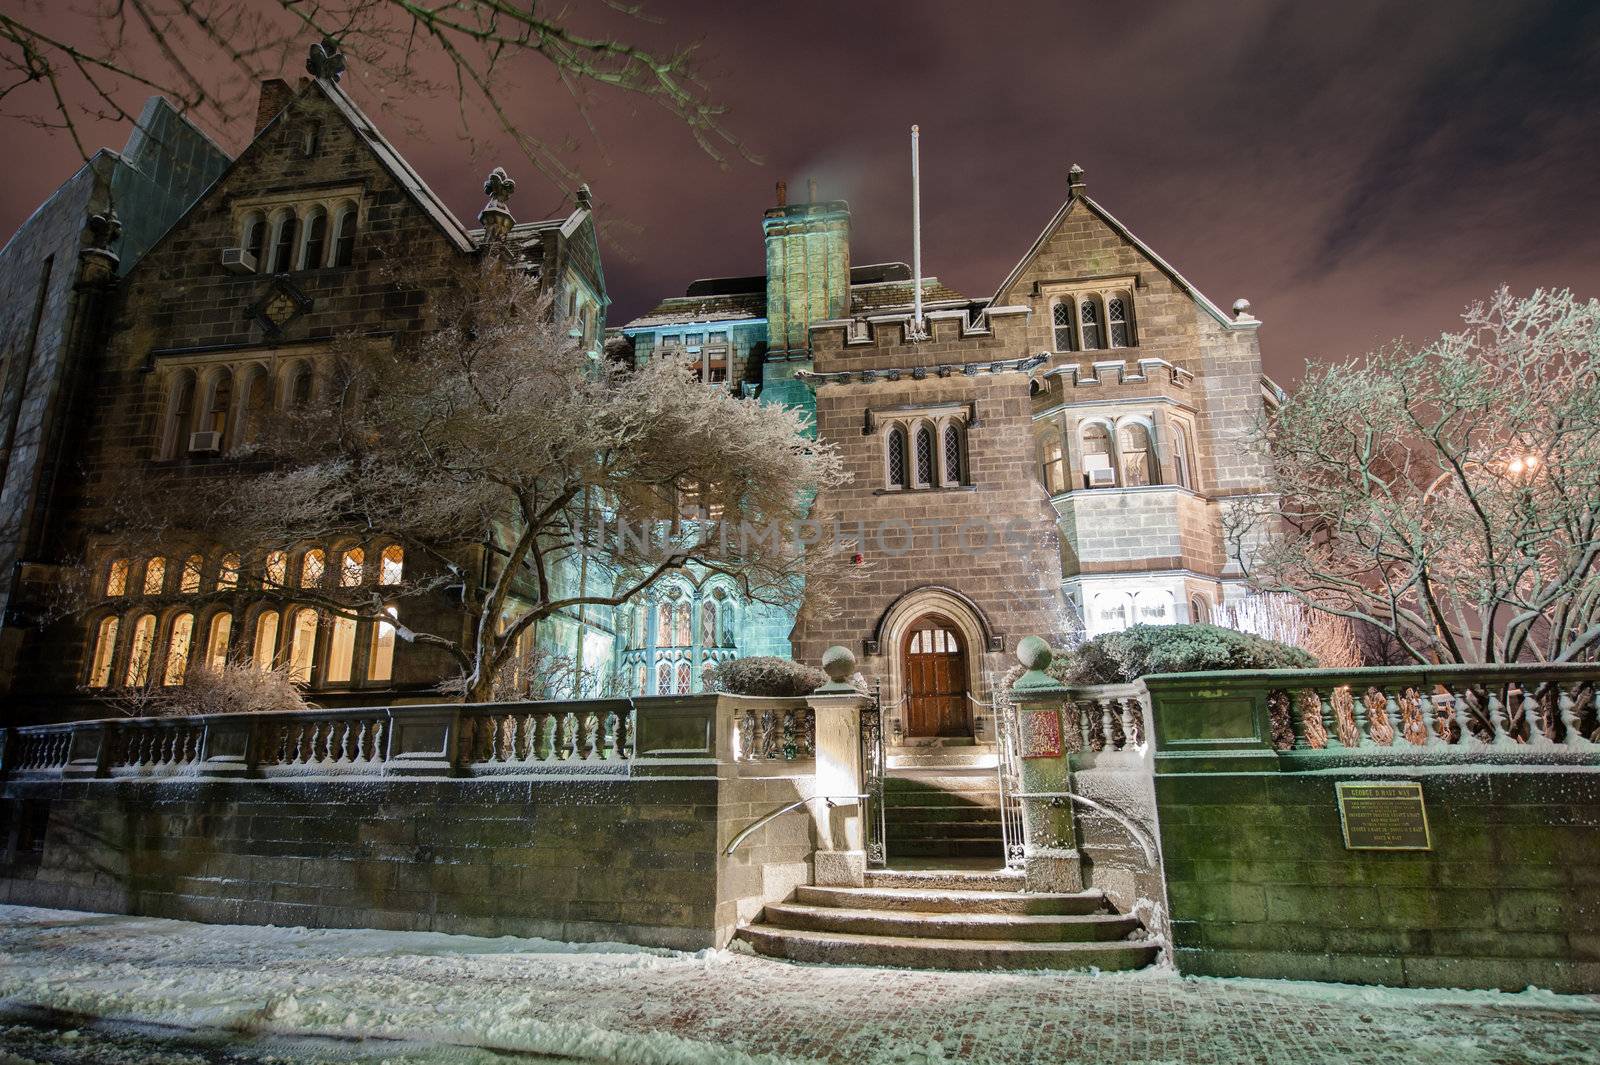 The Castle at Boston University by edan